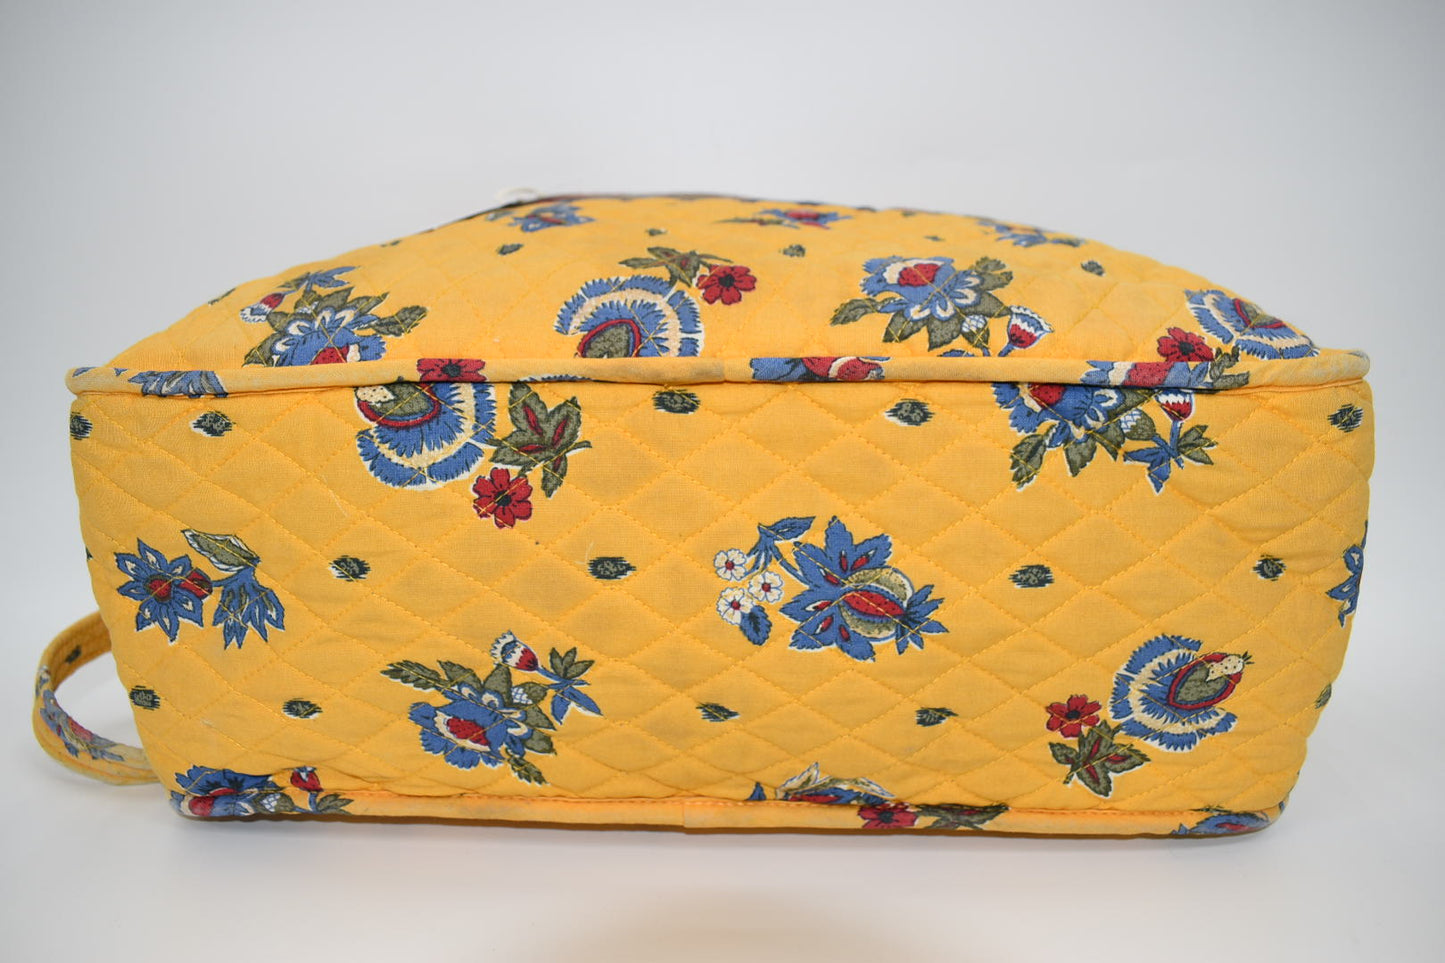 Vera Bradley Diaper Tote Bag in "French Yellow - 1999" Pattern